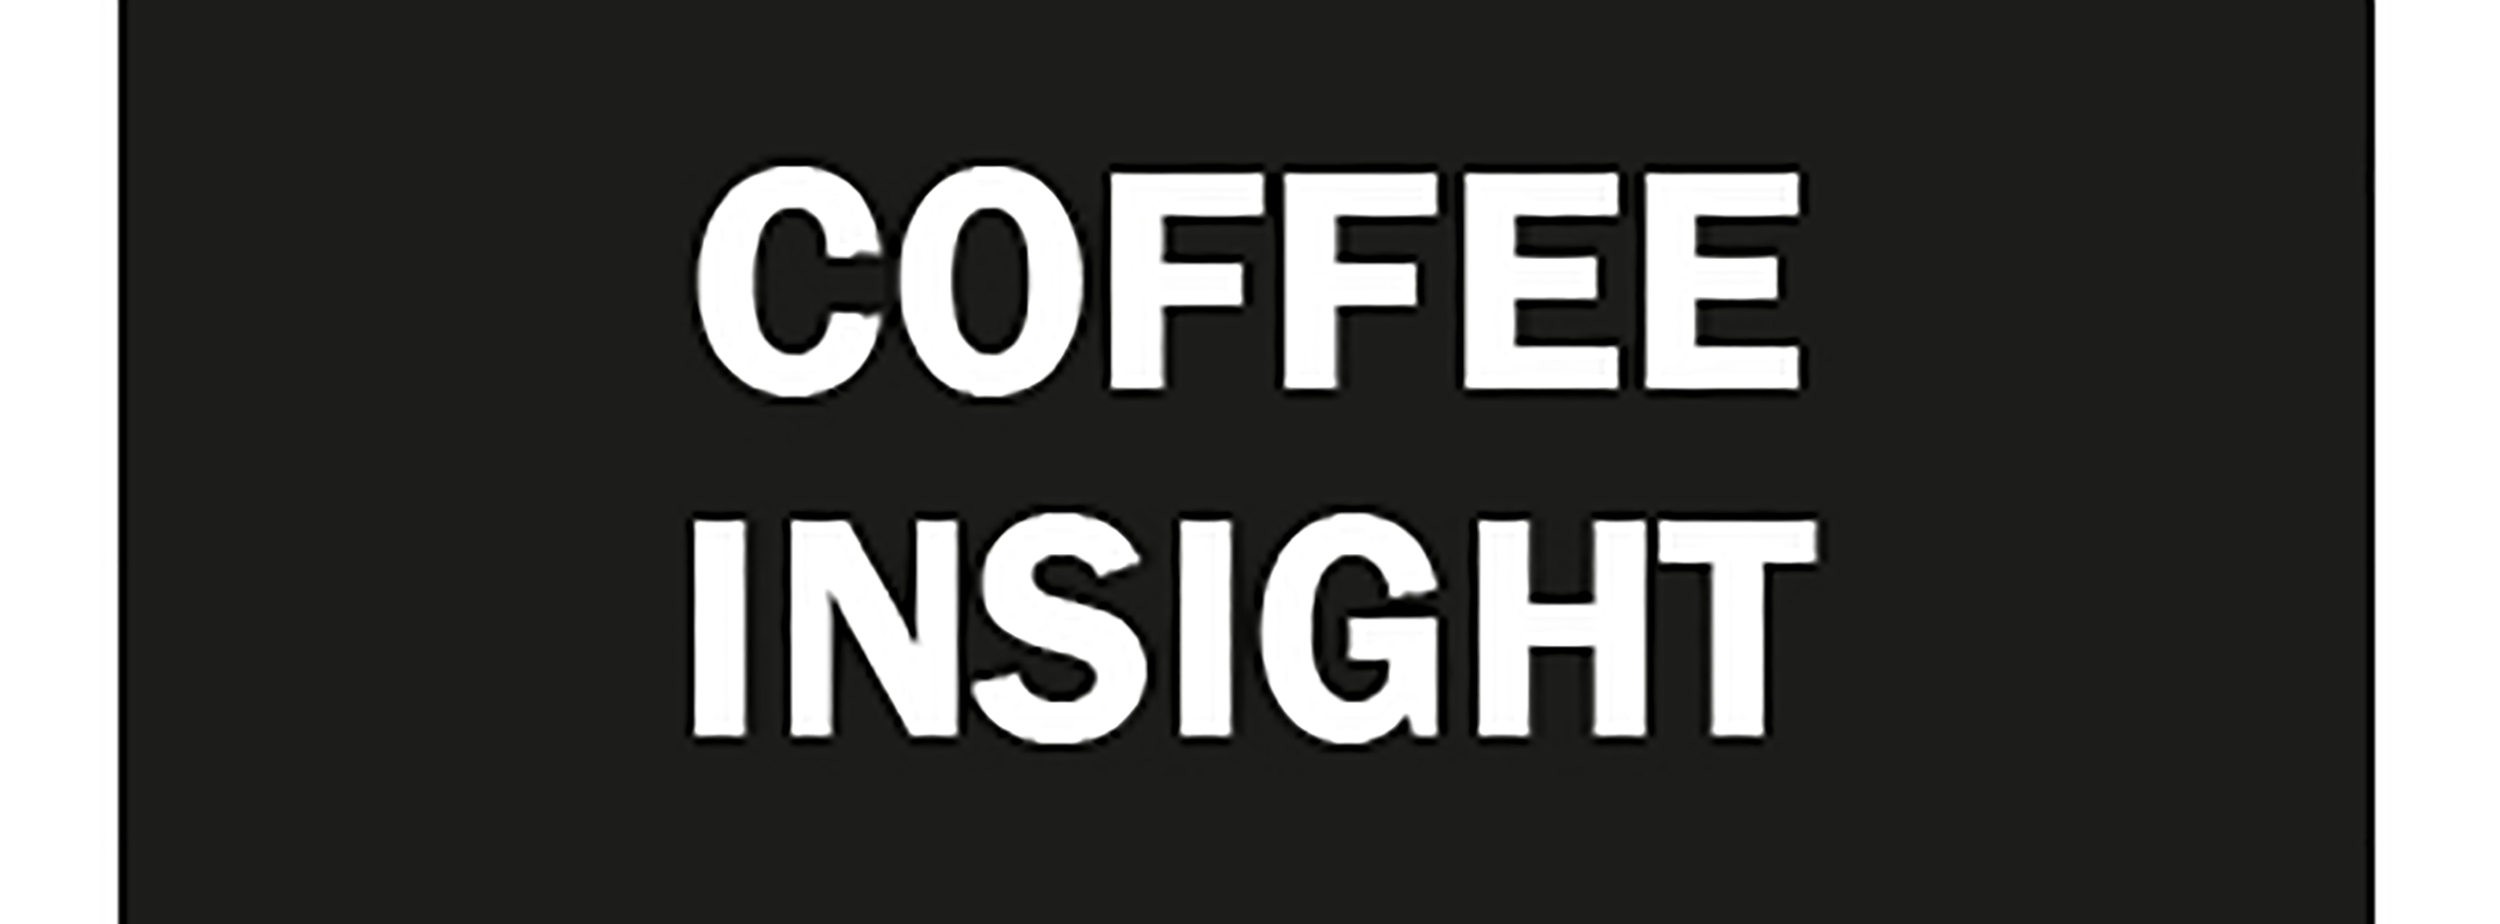 Coffee Insight BUTTON.jpg